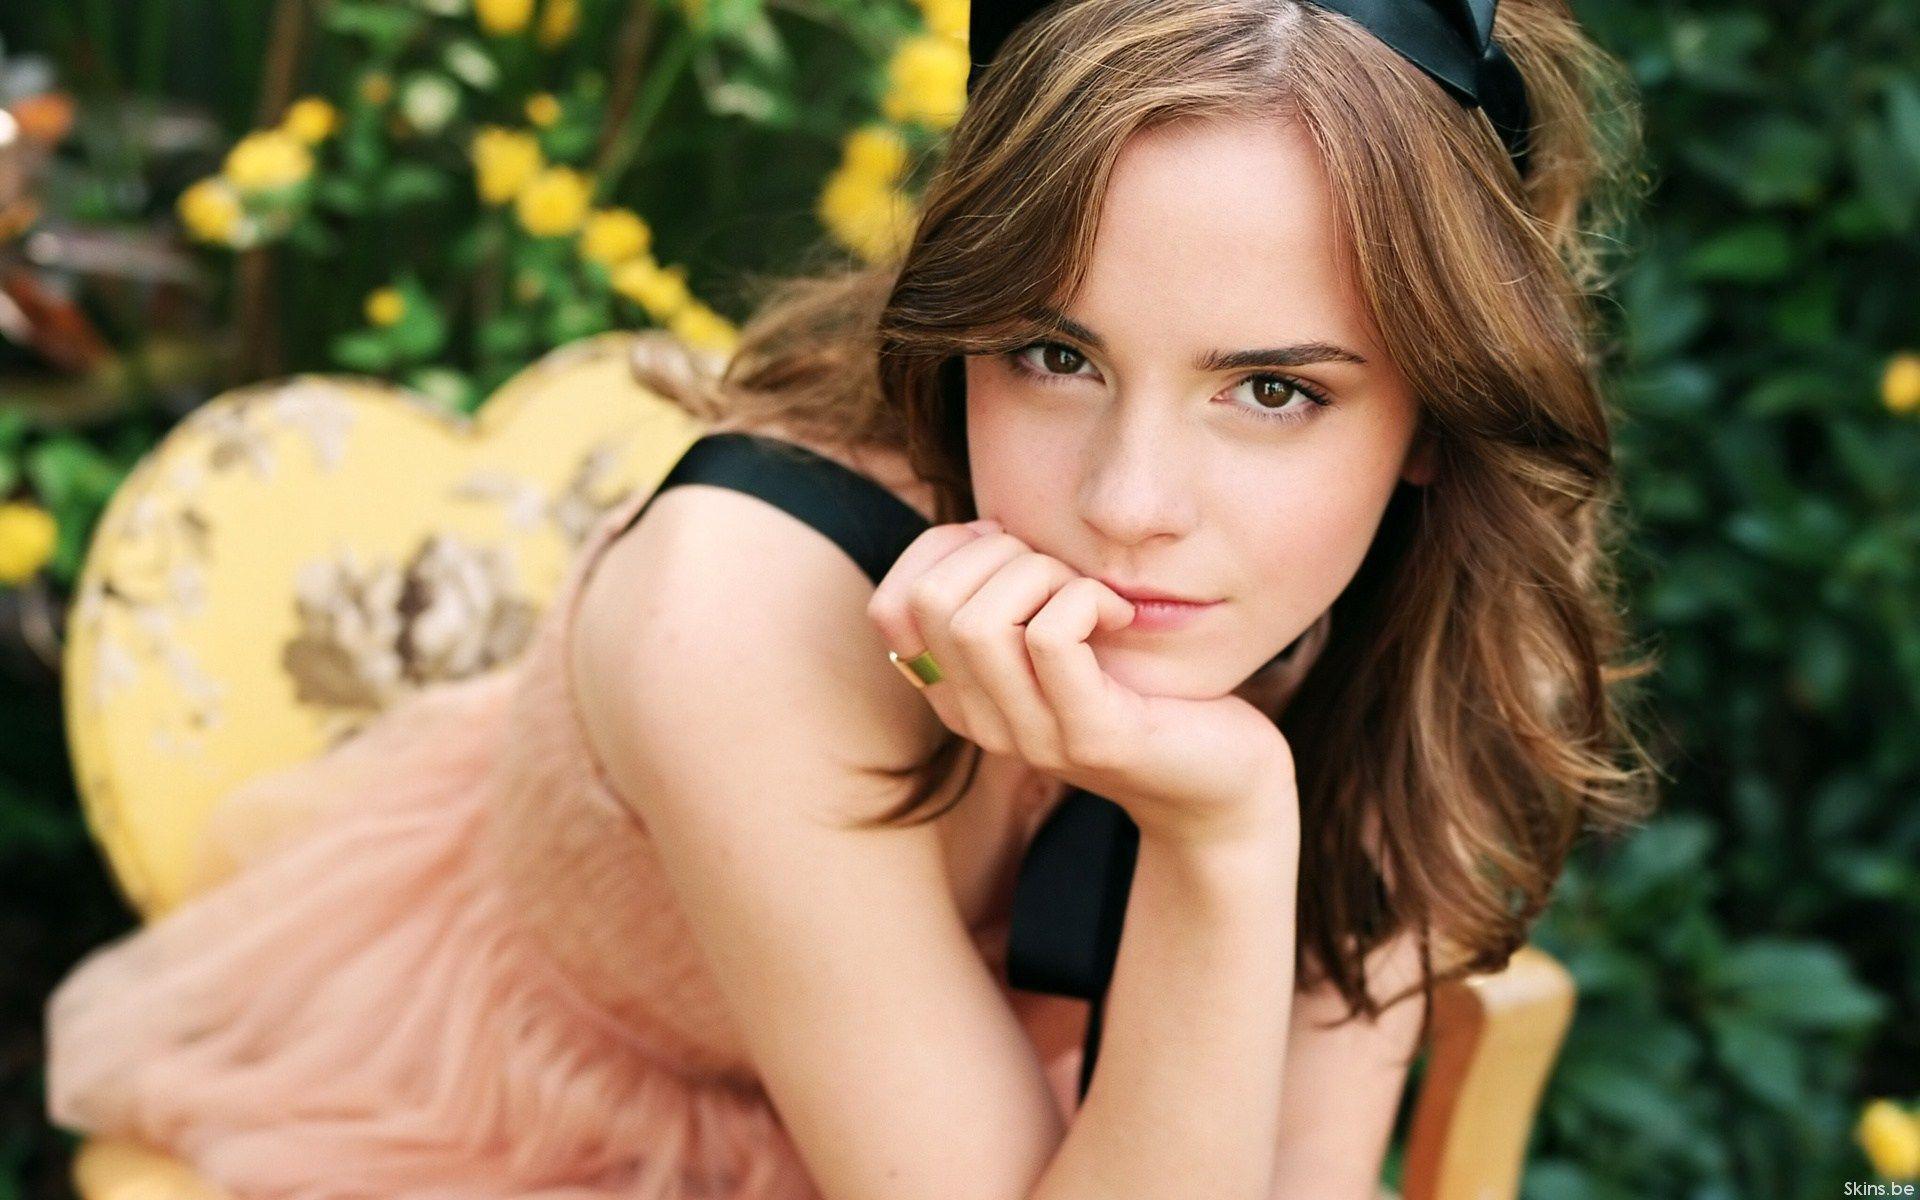 Emma Watson Age, Biography, Wiki, Movie, Career